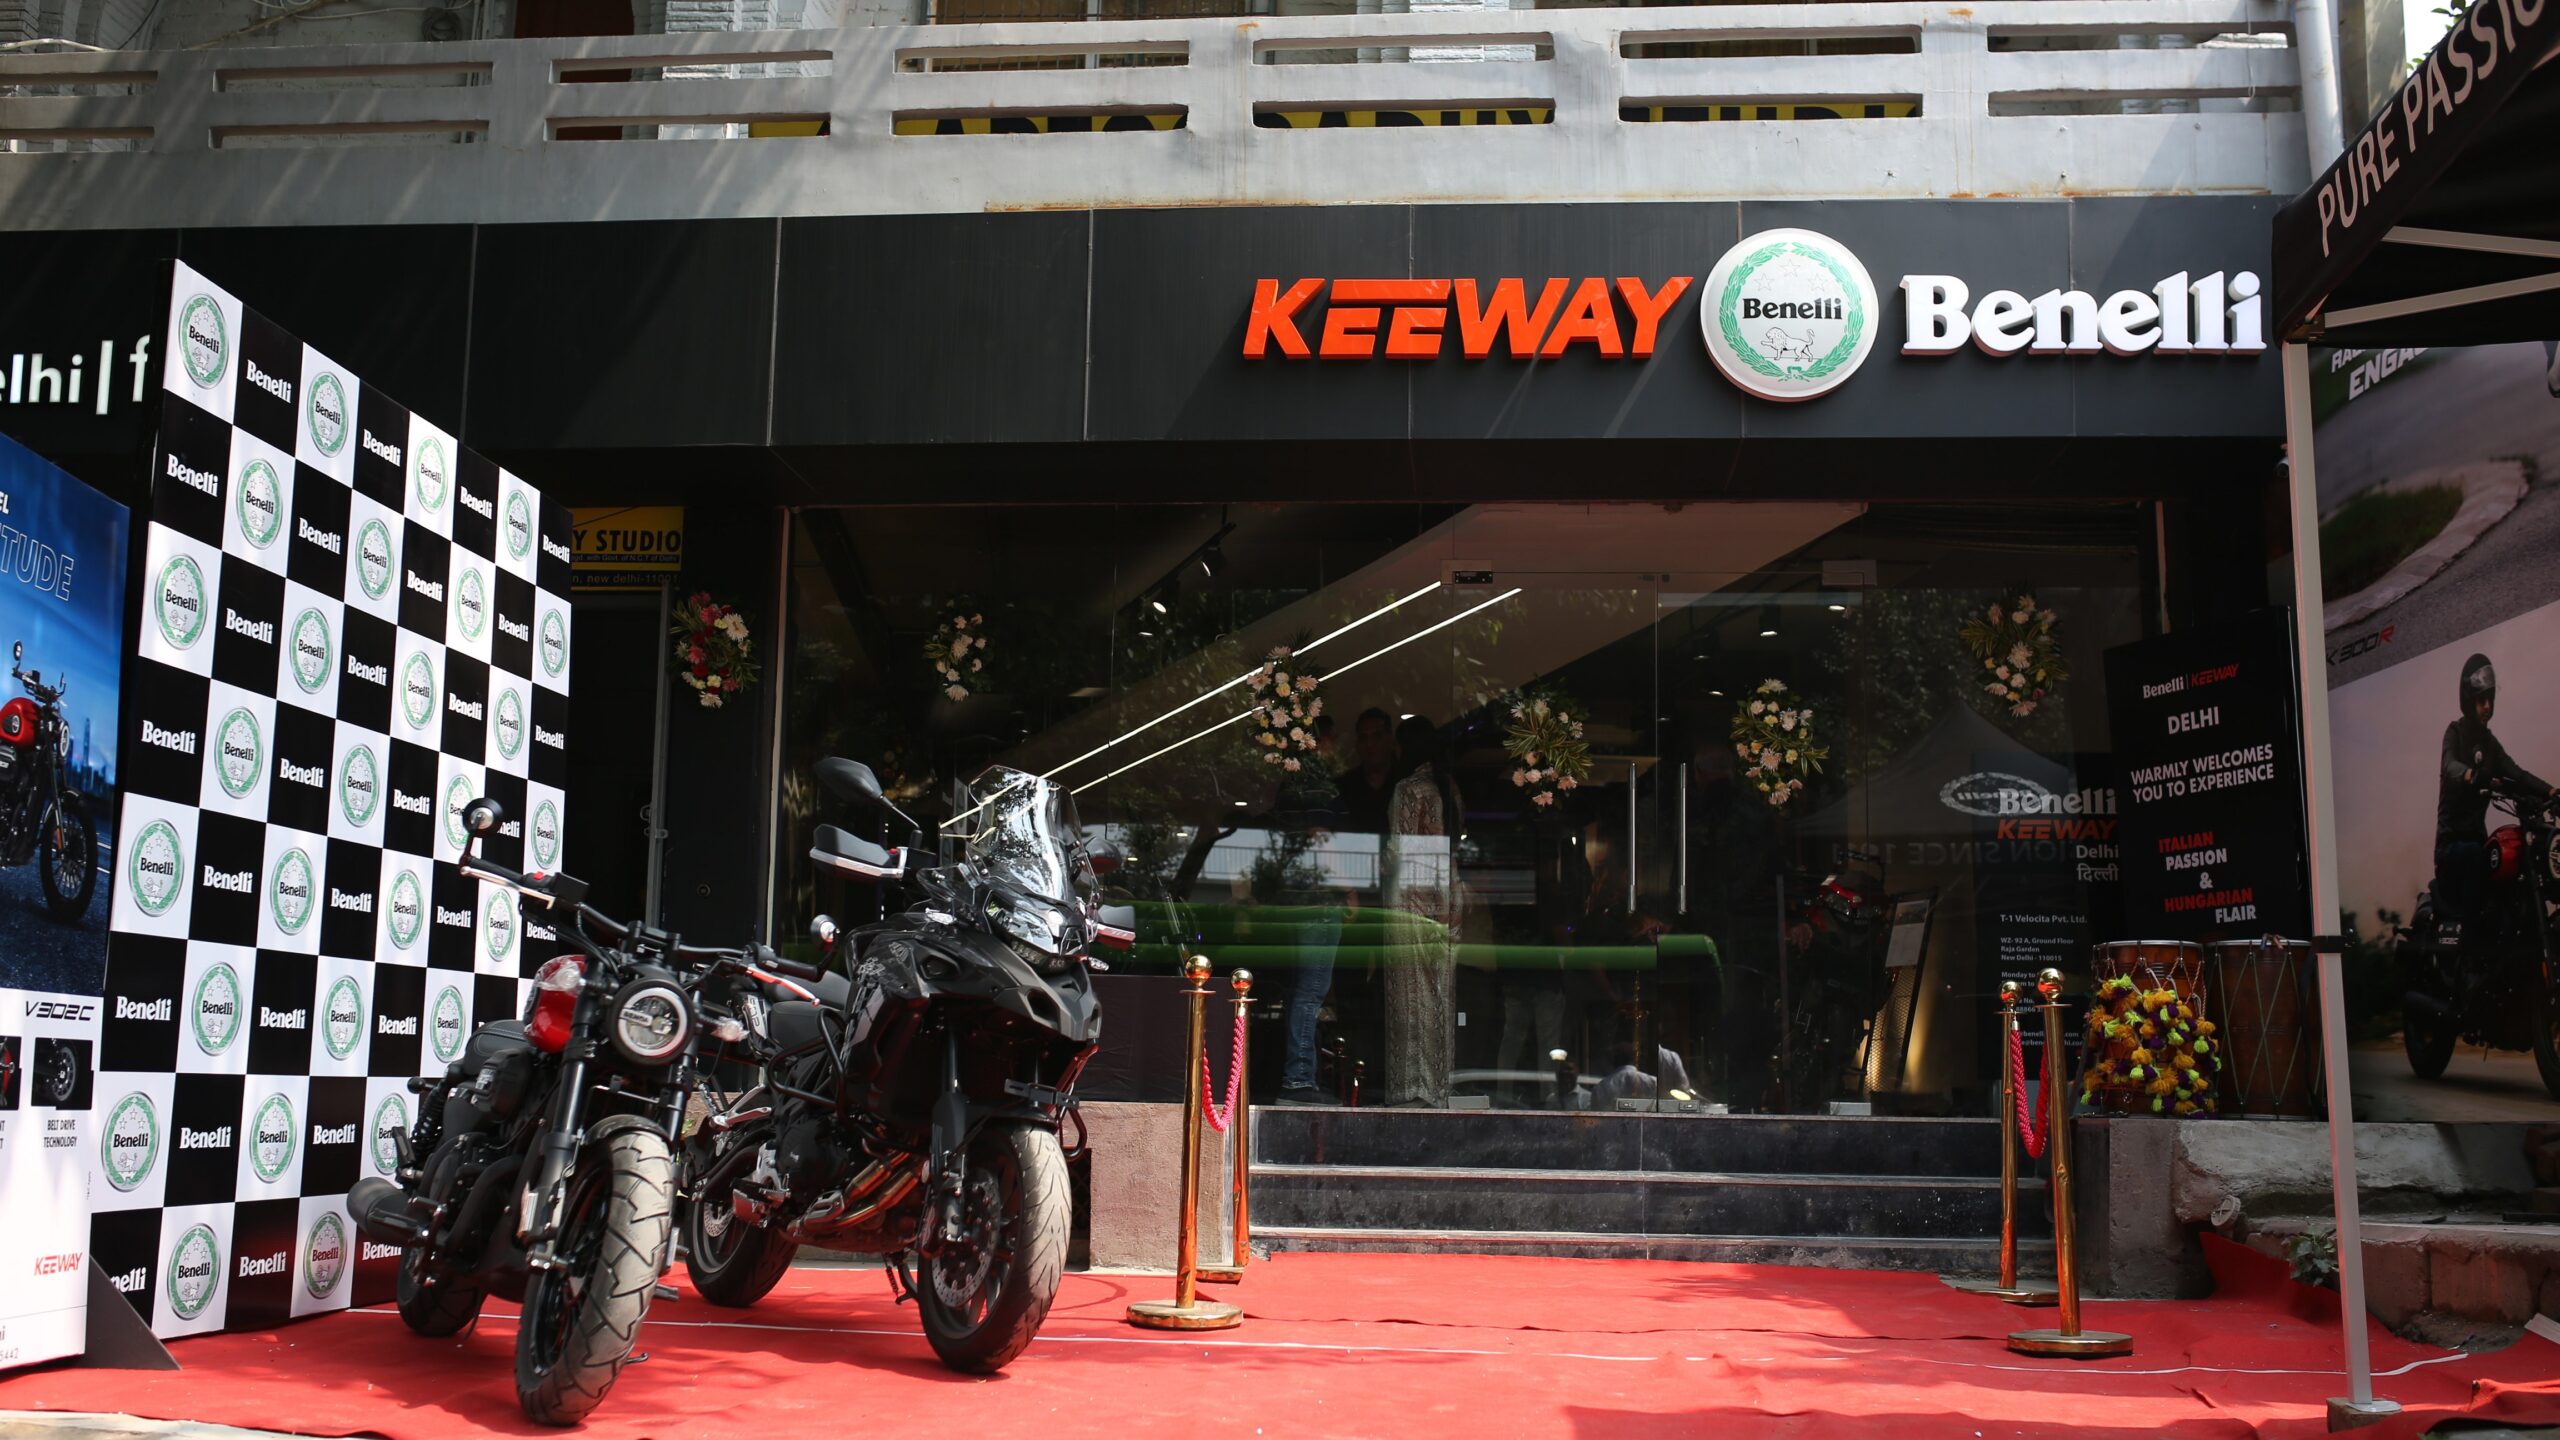 Benelli Keeway Dealership Opens Up In Delhi NCR